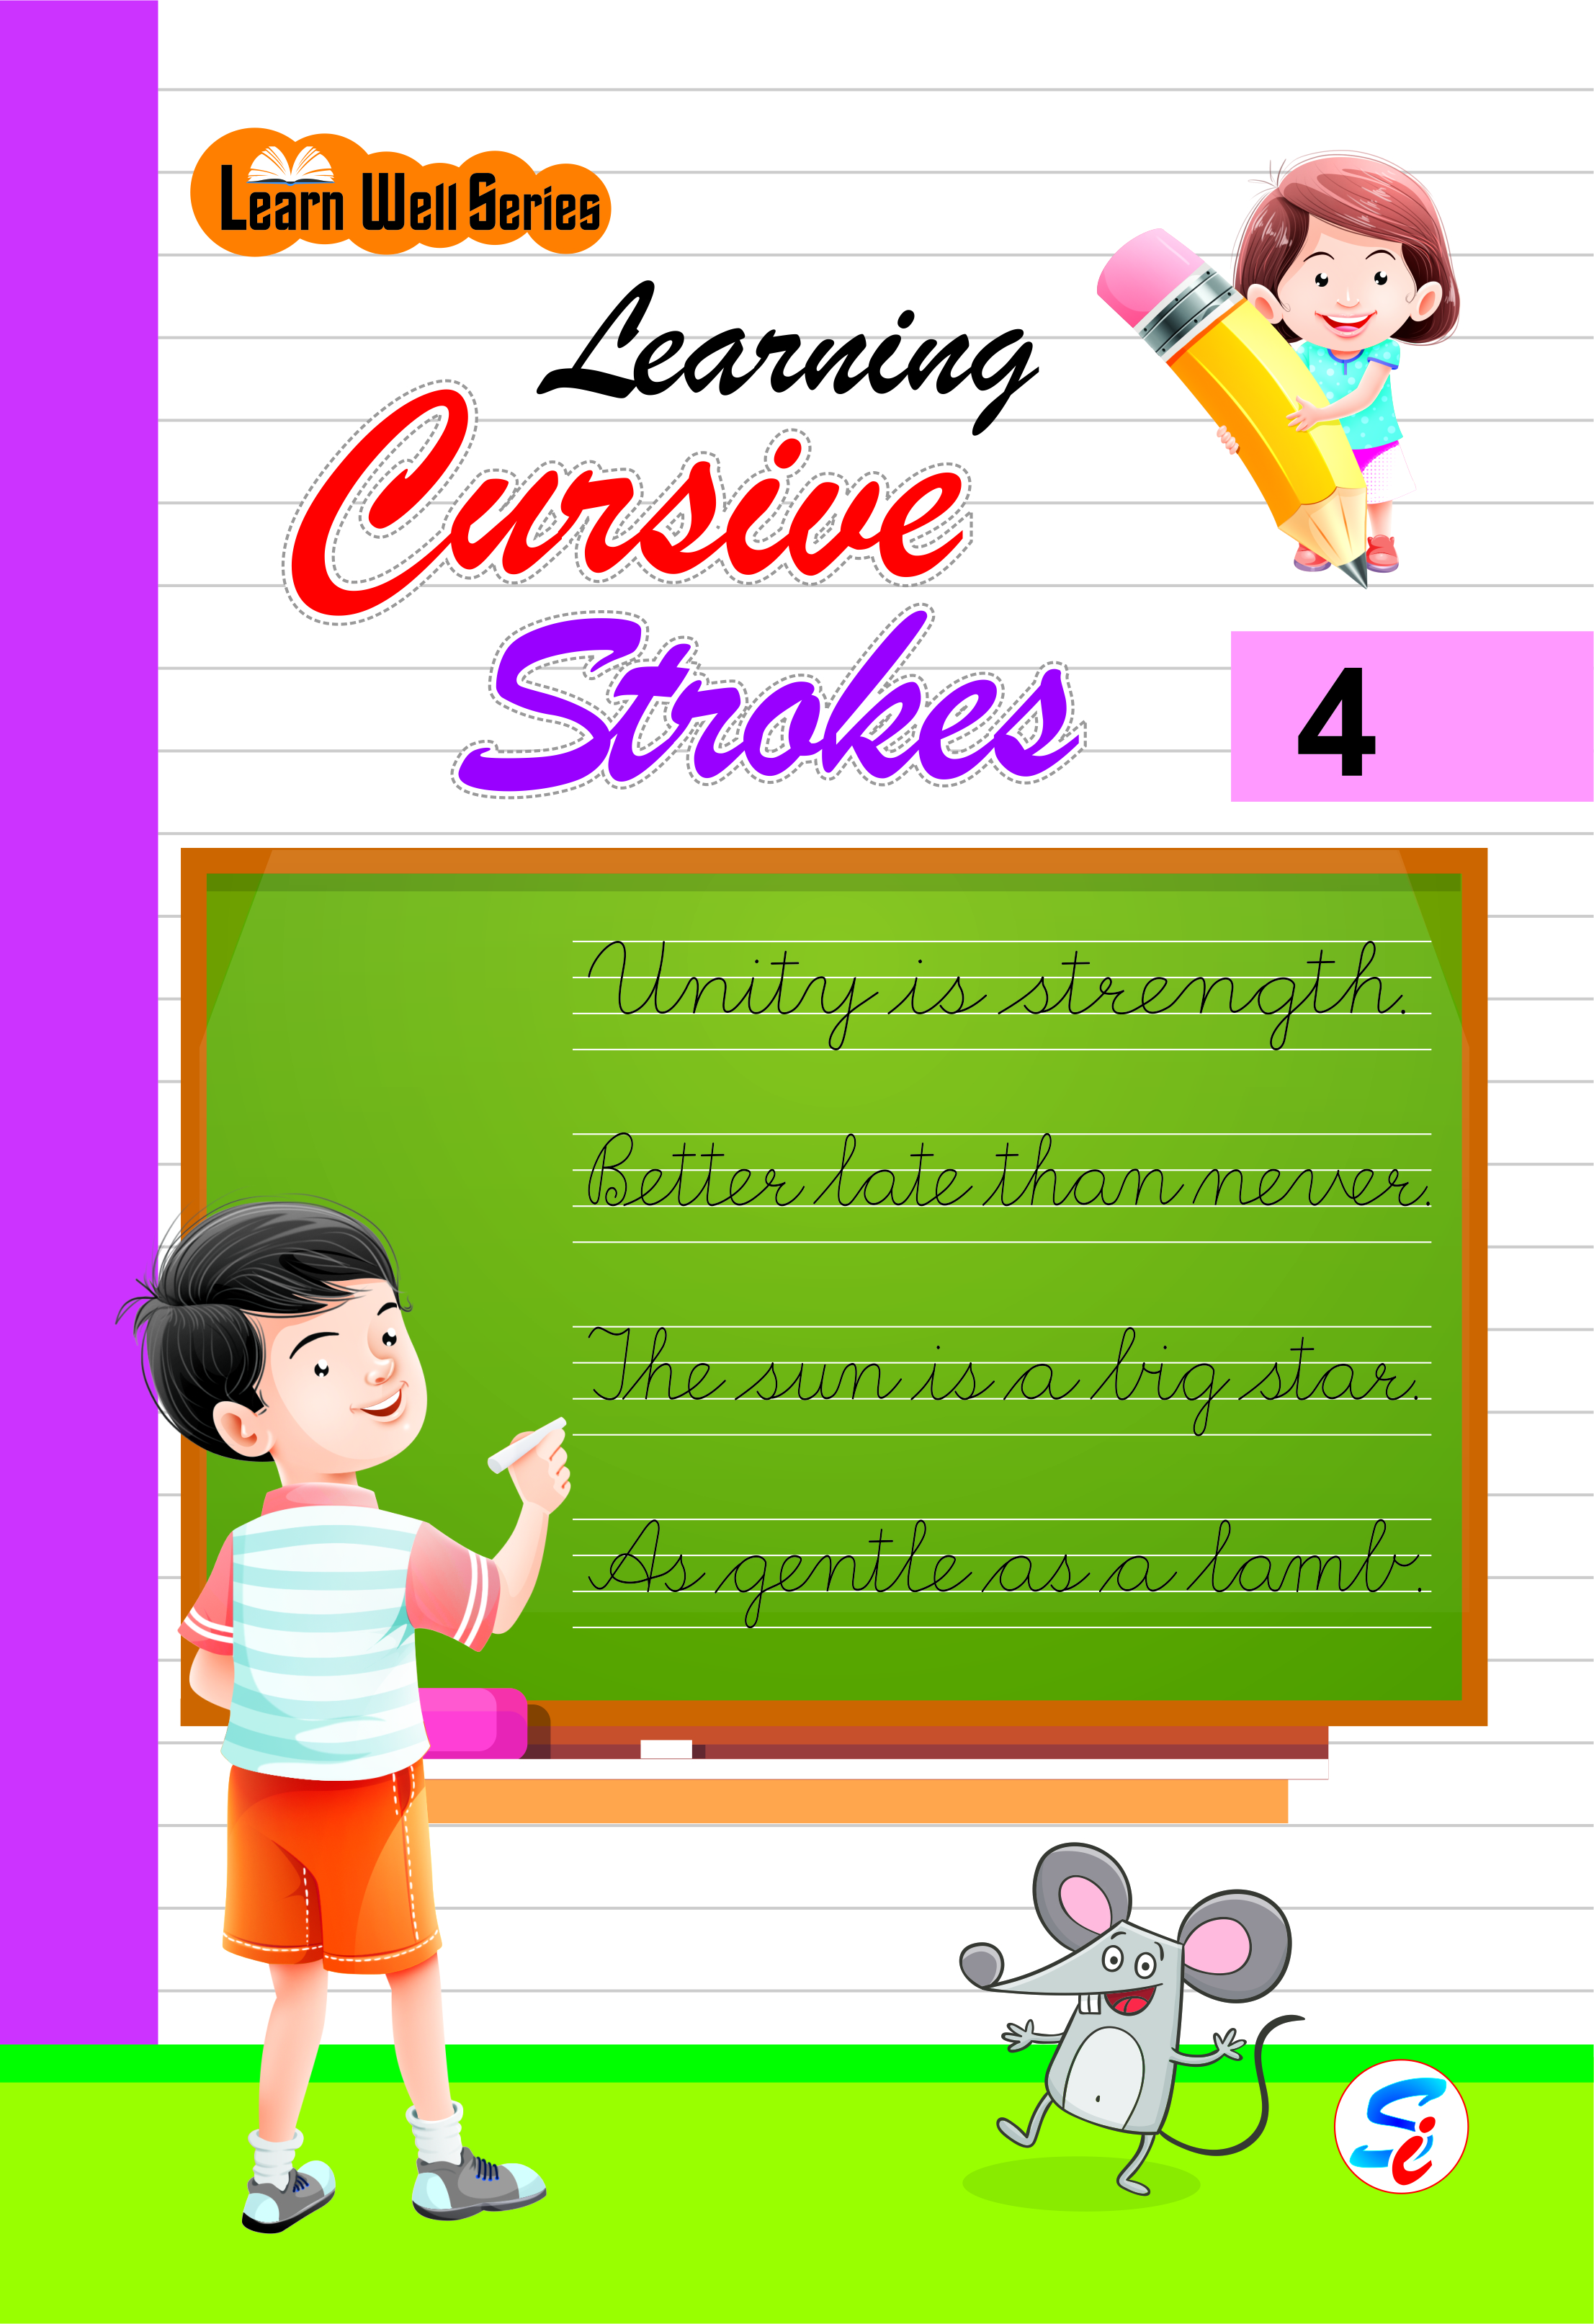 LEARNING CURSIVE STROKES 4